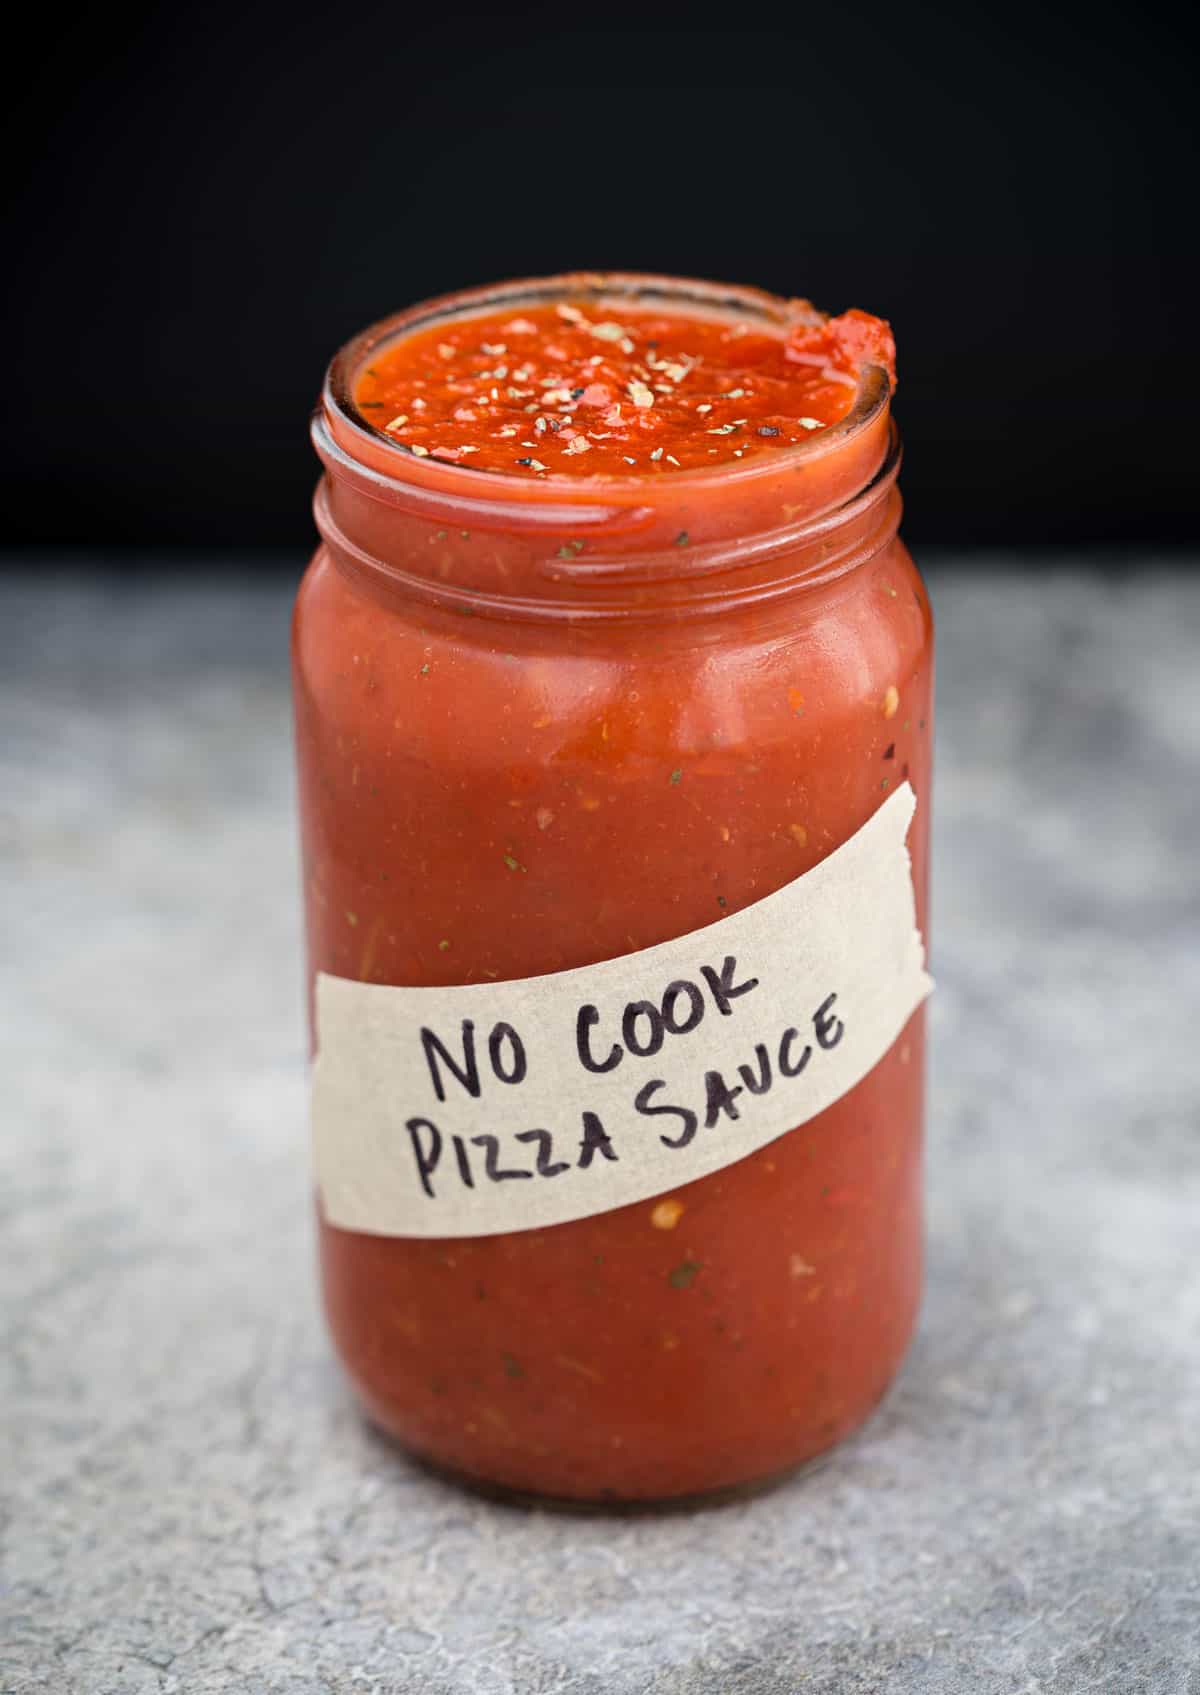 A jar of no cook pizza sauce.